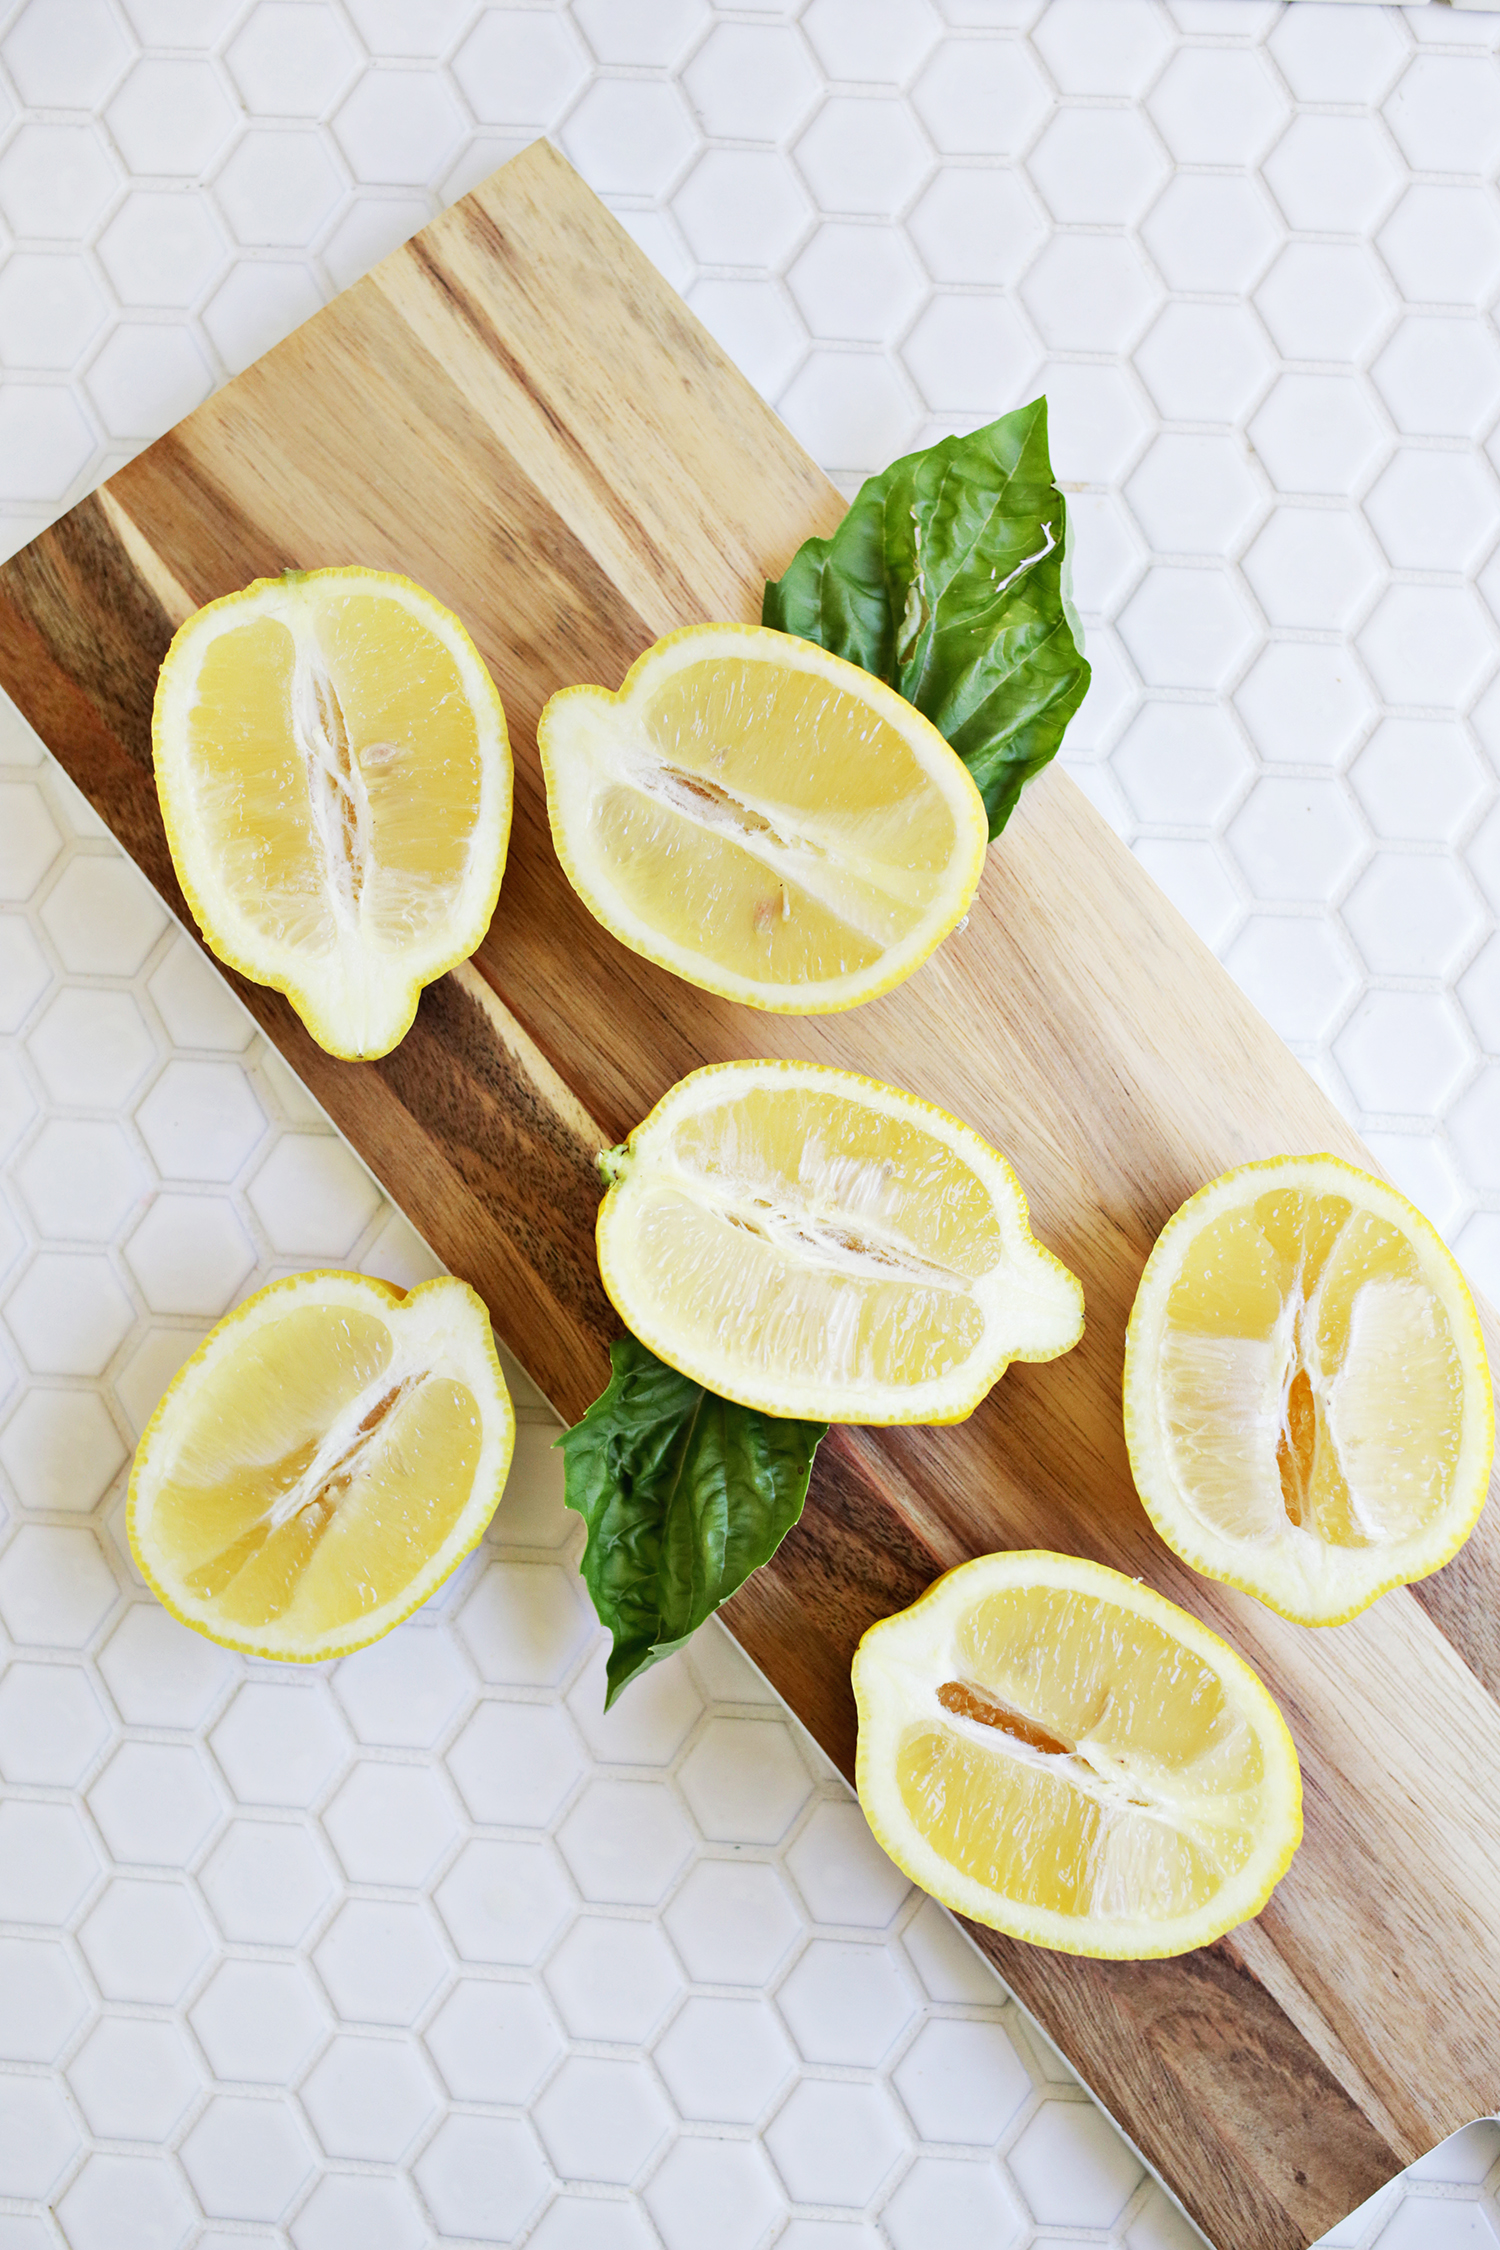 6 lemon halves on a wooden cutting board